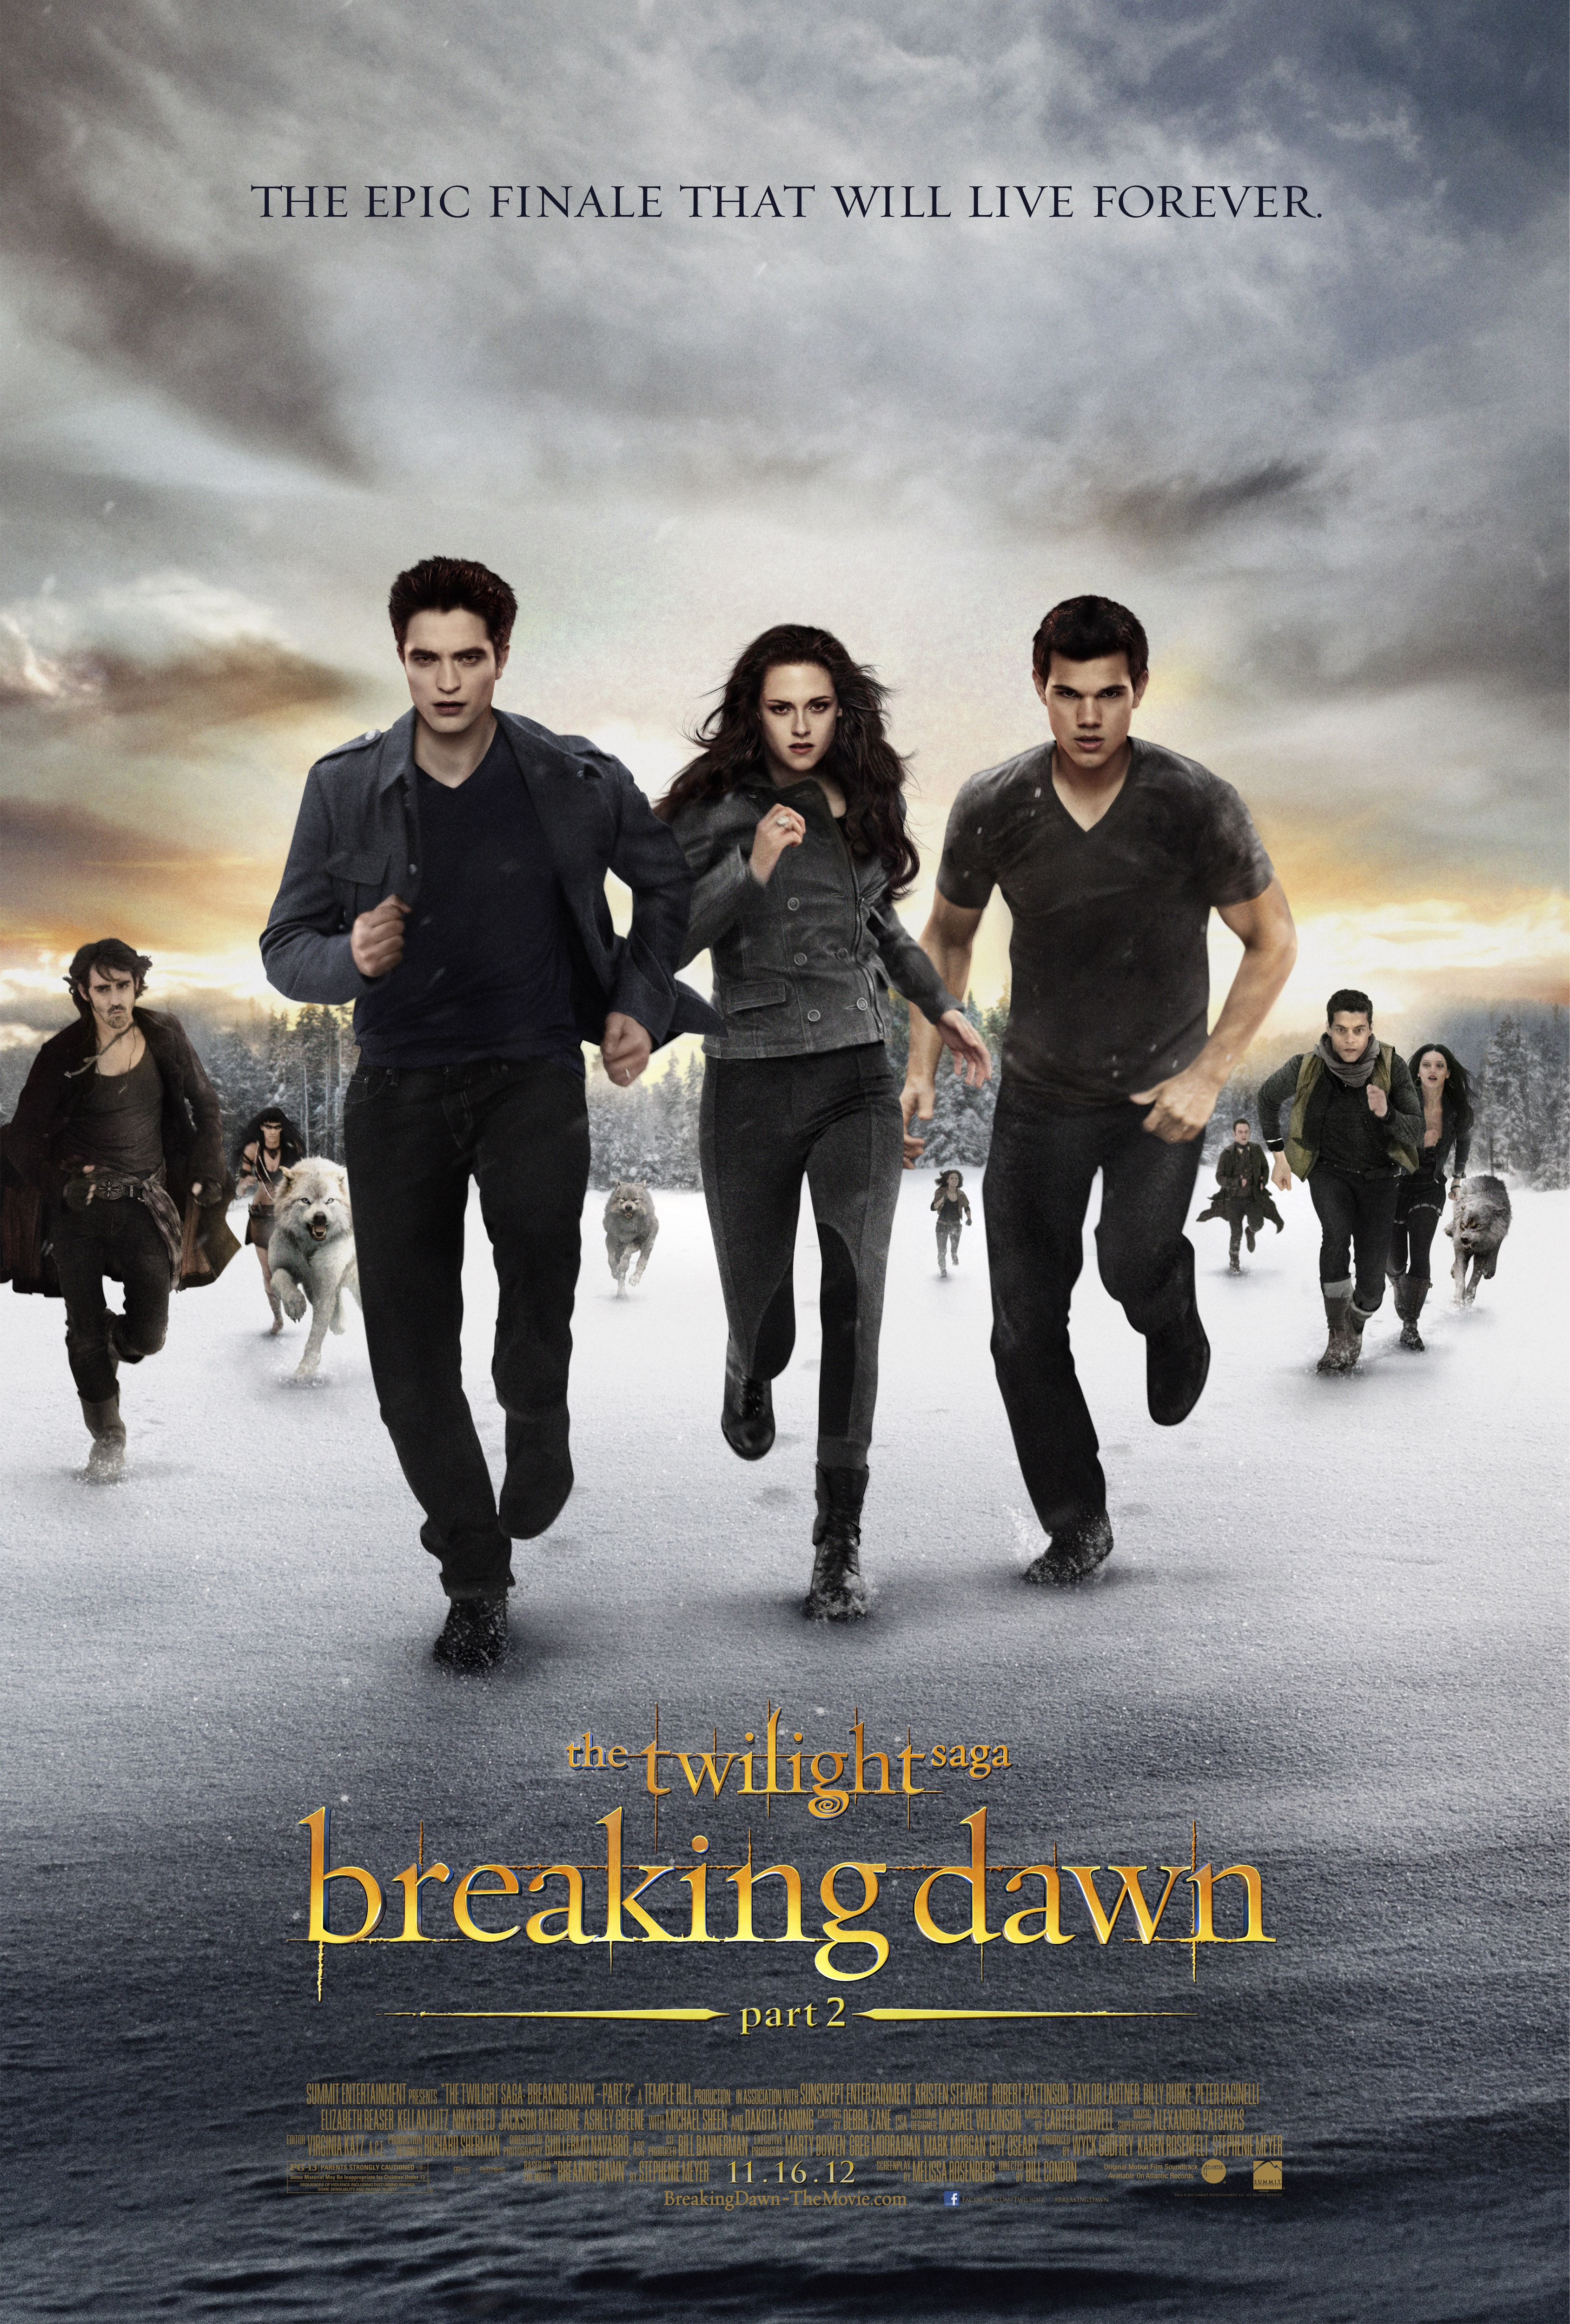 Twilight Saga Breaking Dawn Part 2 Poster